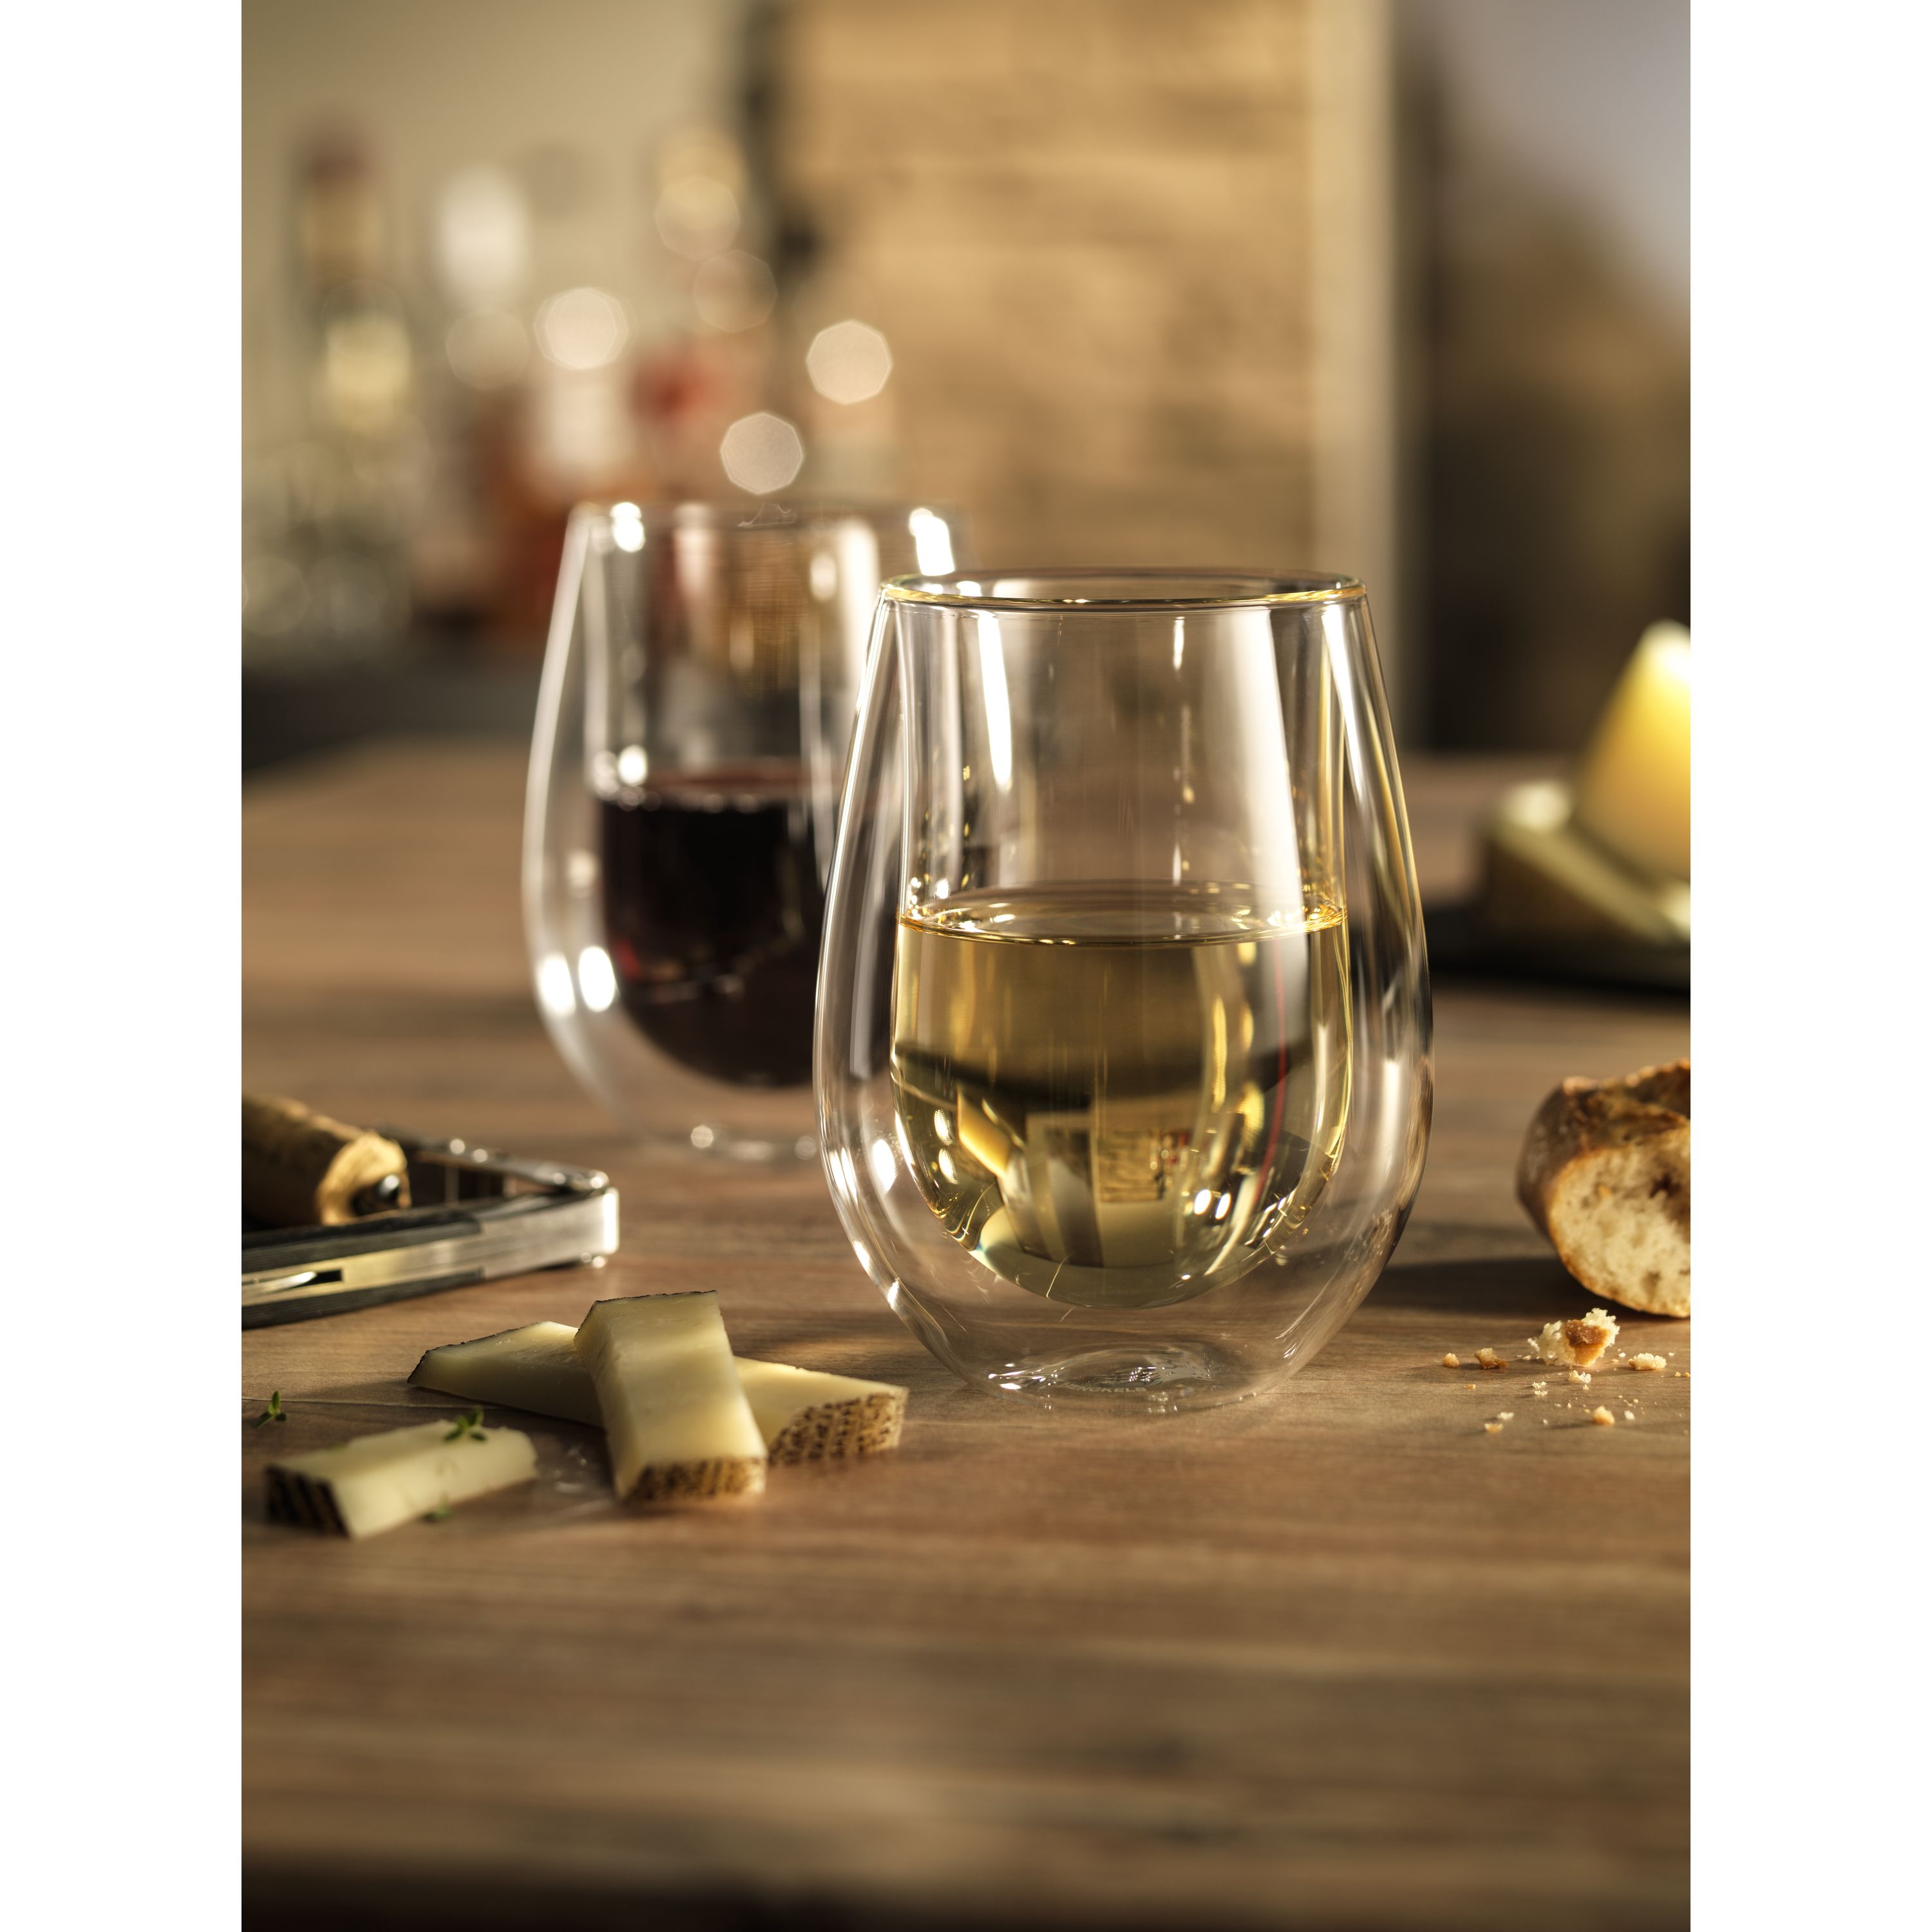 Buy ZWILLING Prédicat Glassware White wine glass set